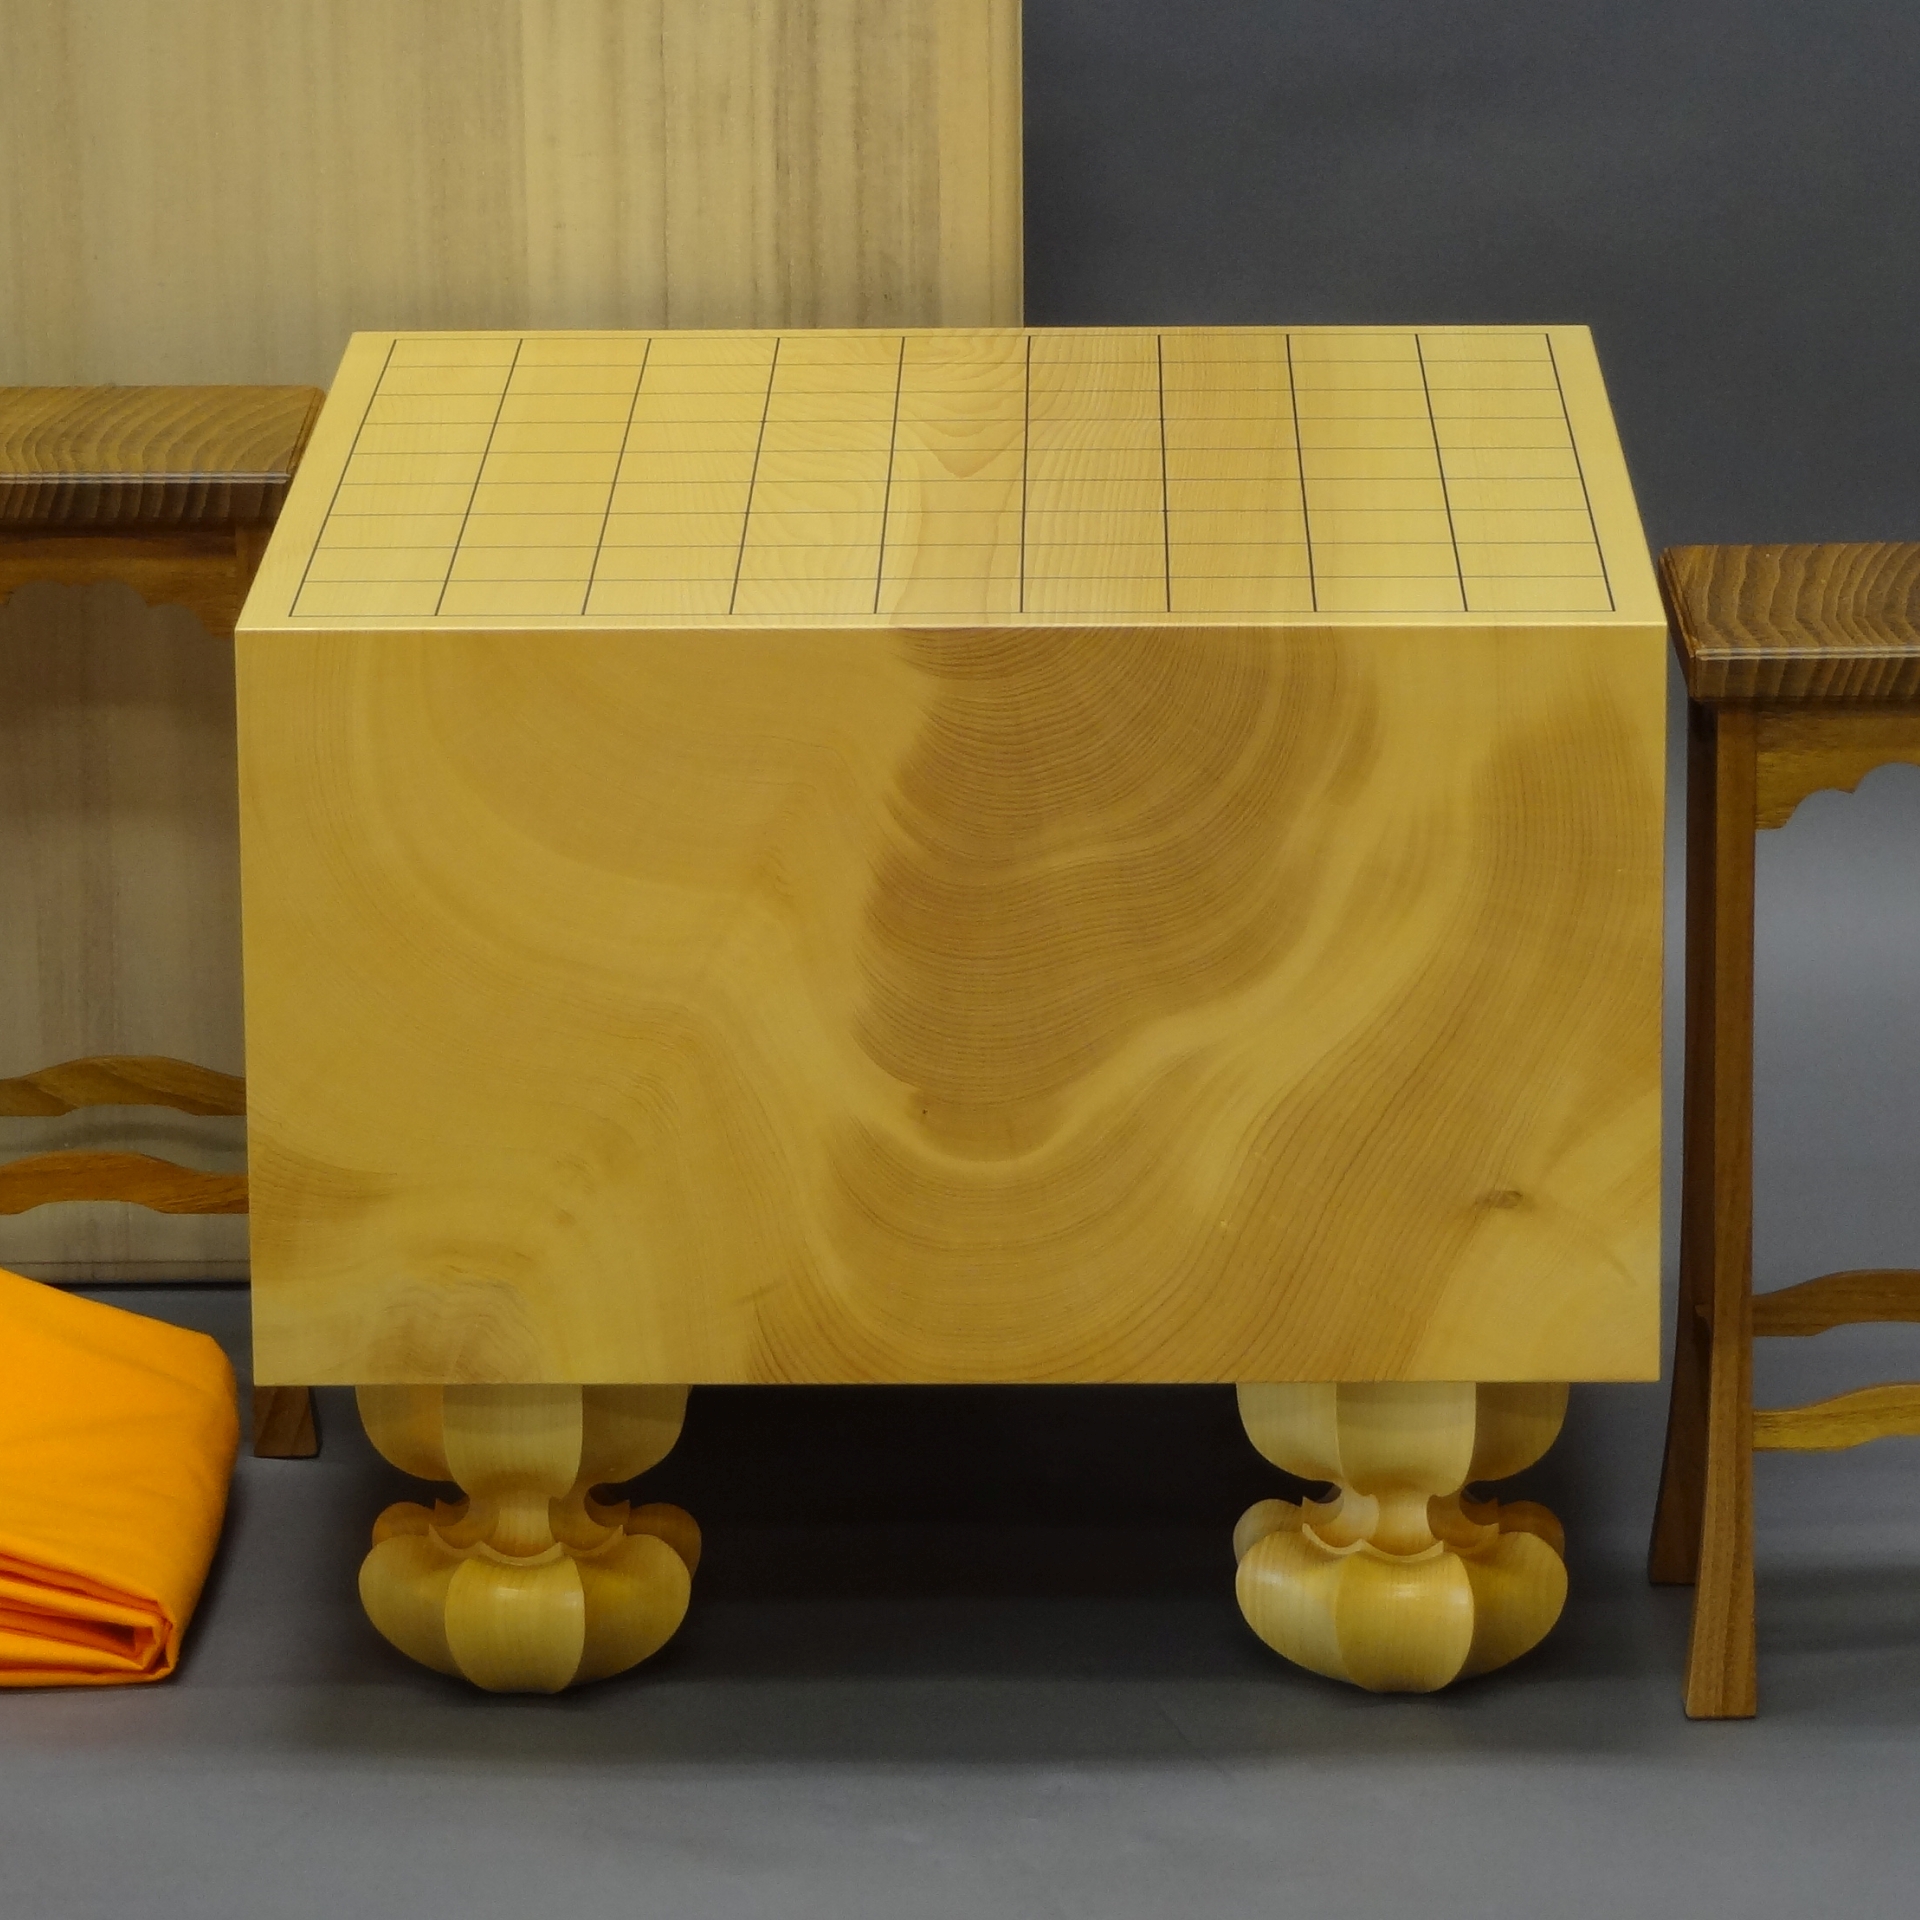 Table Shogi Board